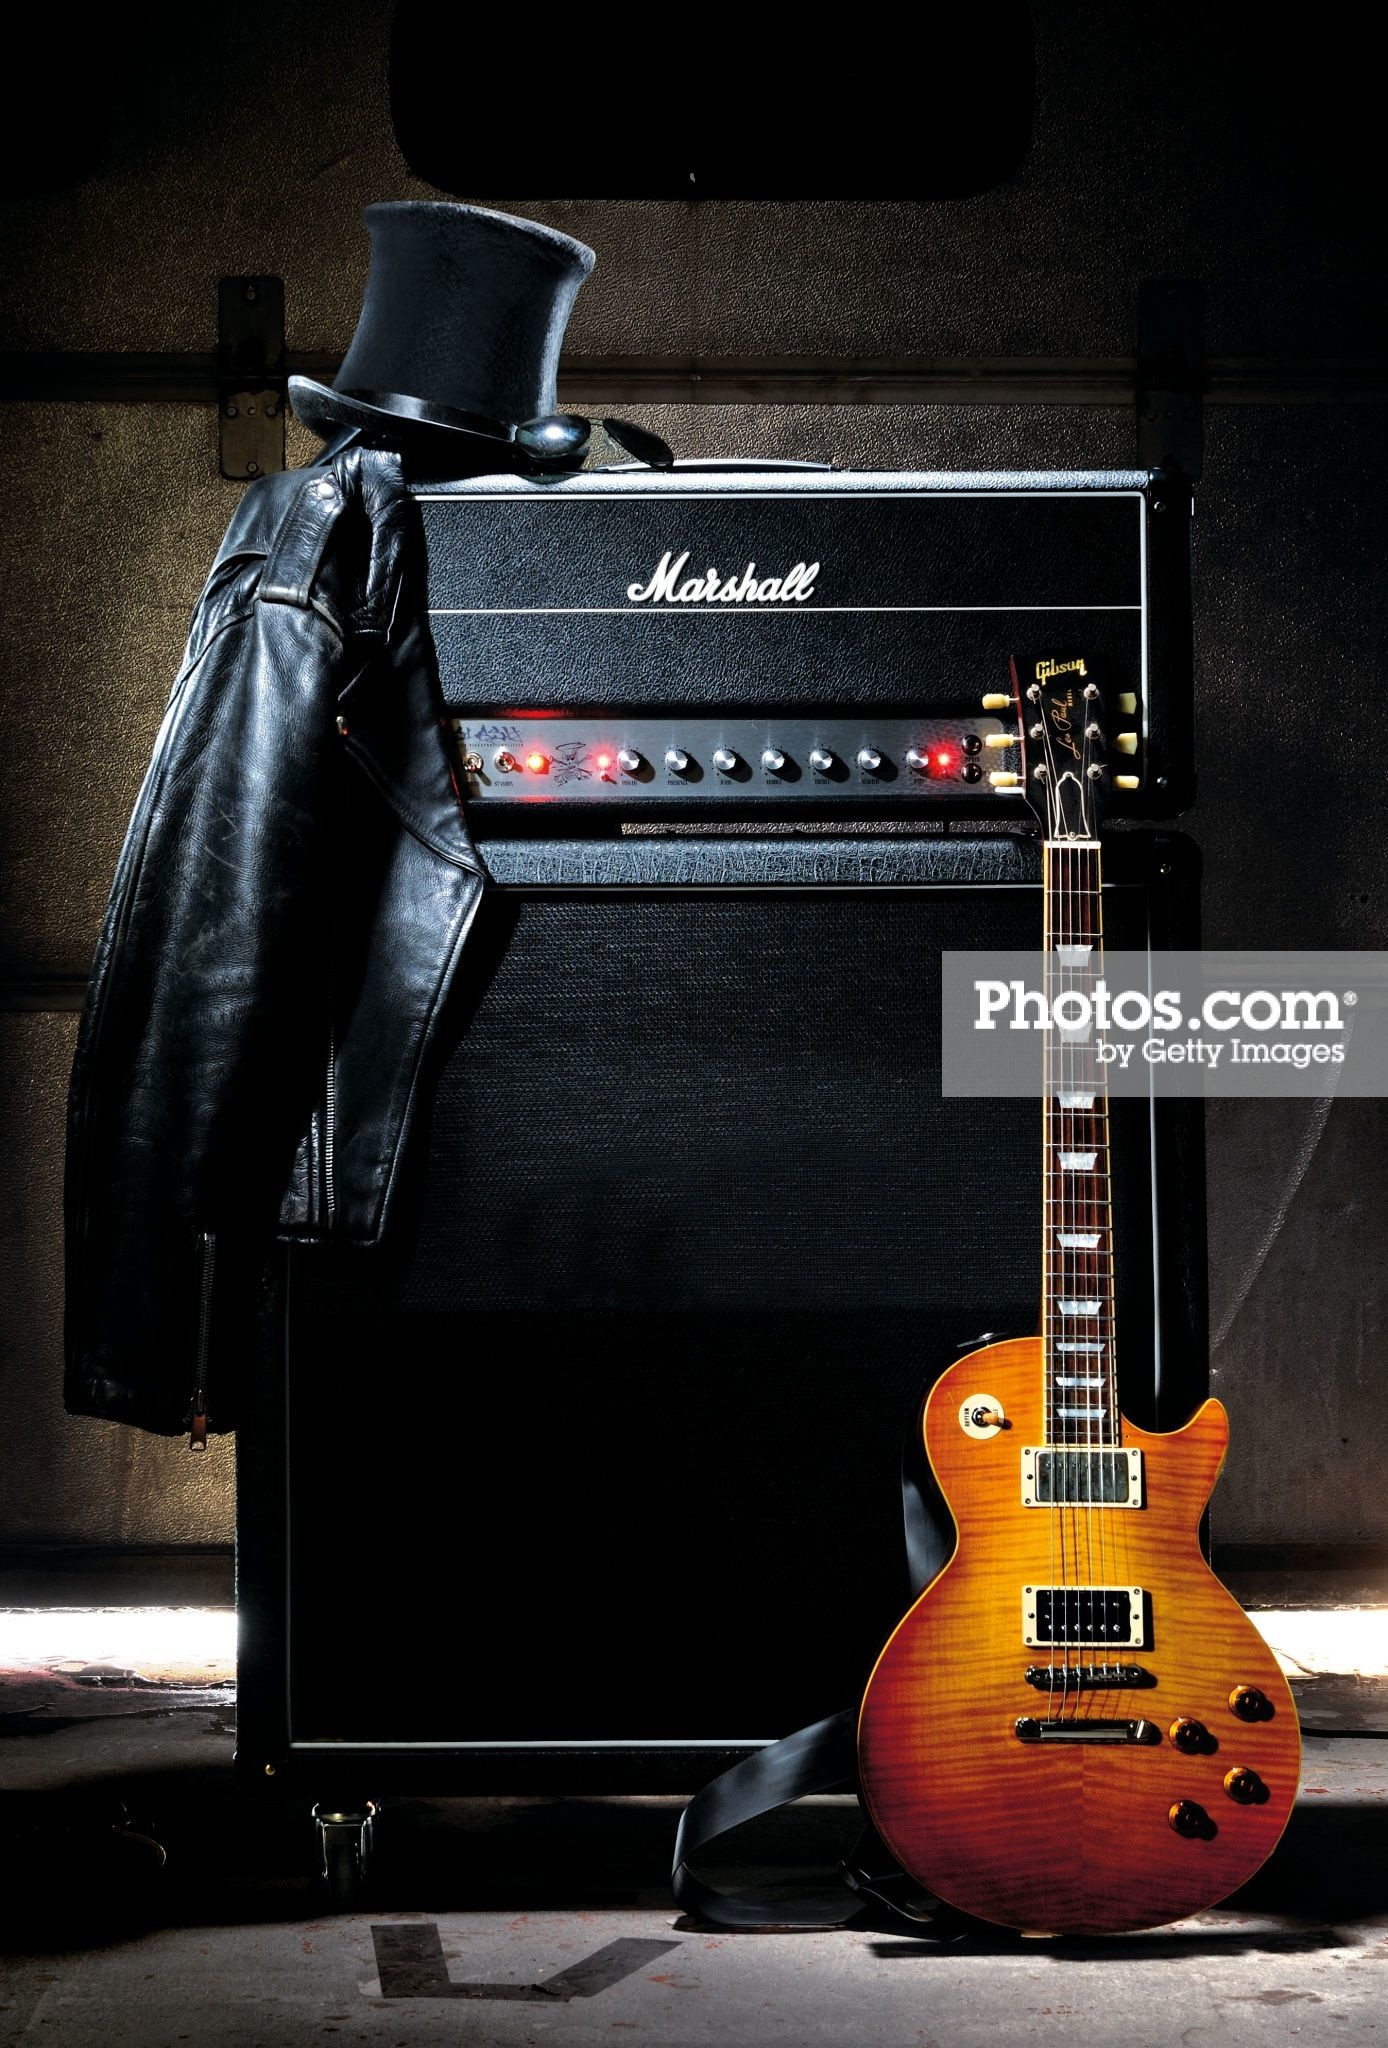 1388x2048 Marshall Slash Signature Amp Print by Guitarist Magazine at Photos.com